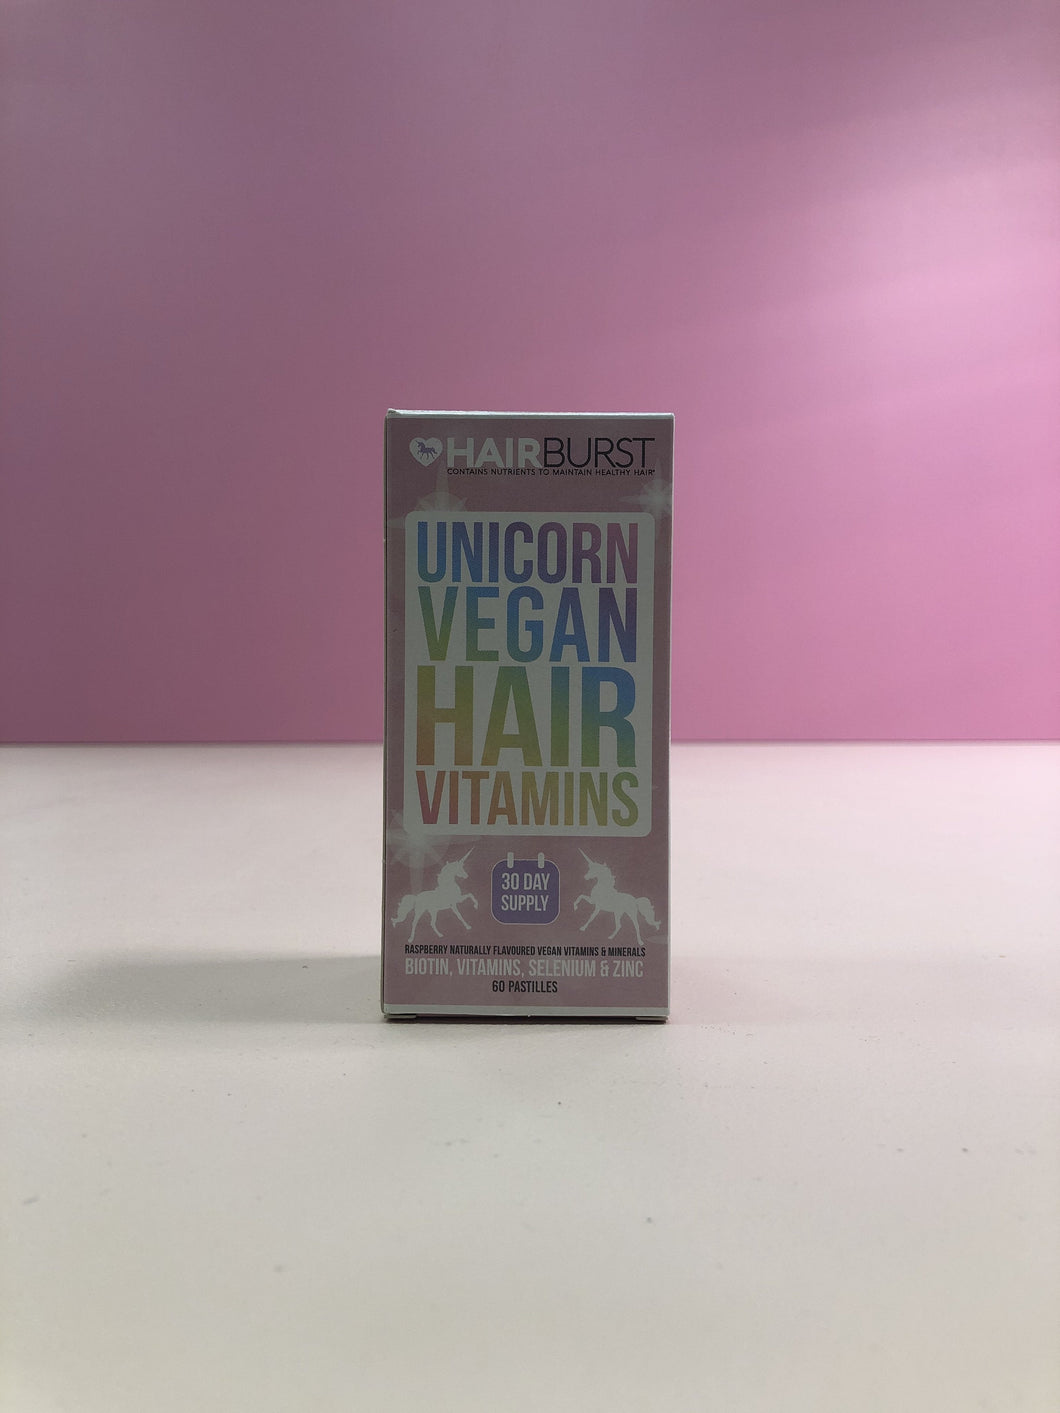 Hairburst- Unicorn Vegan hair vitamins - Front